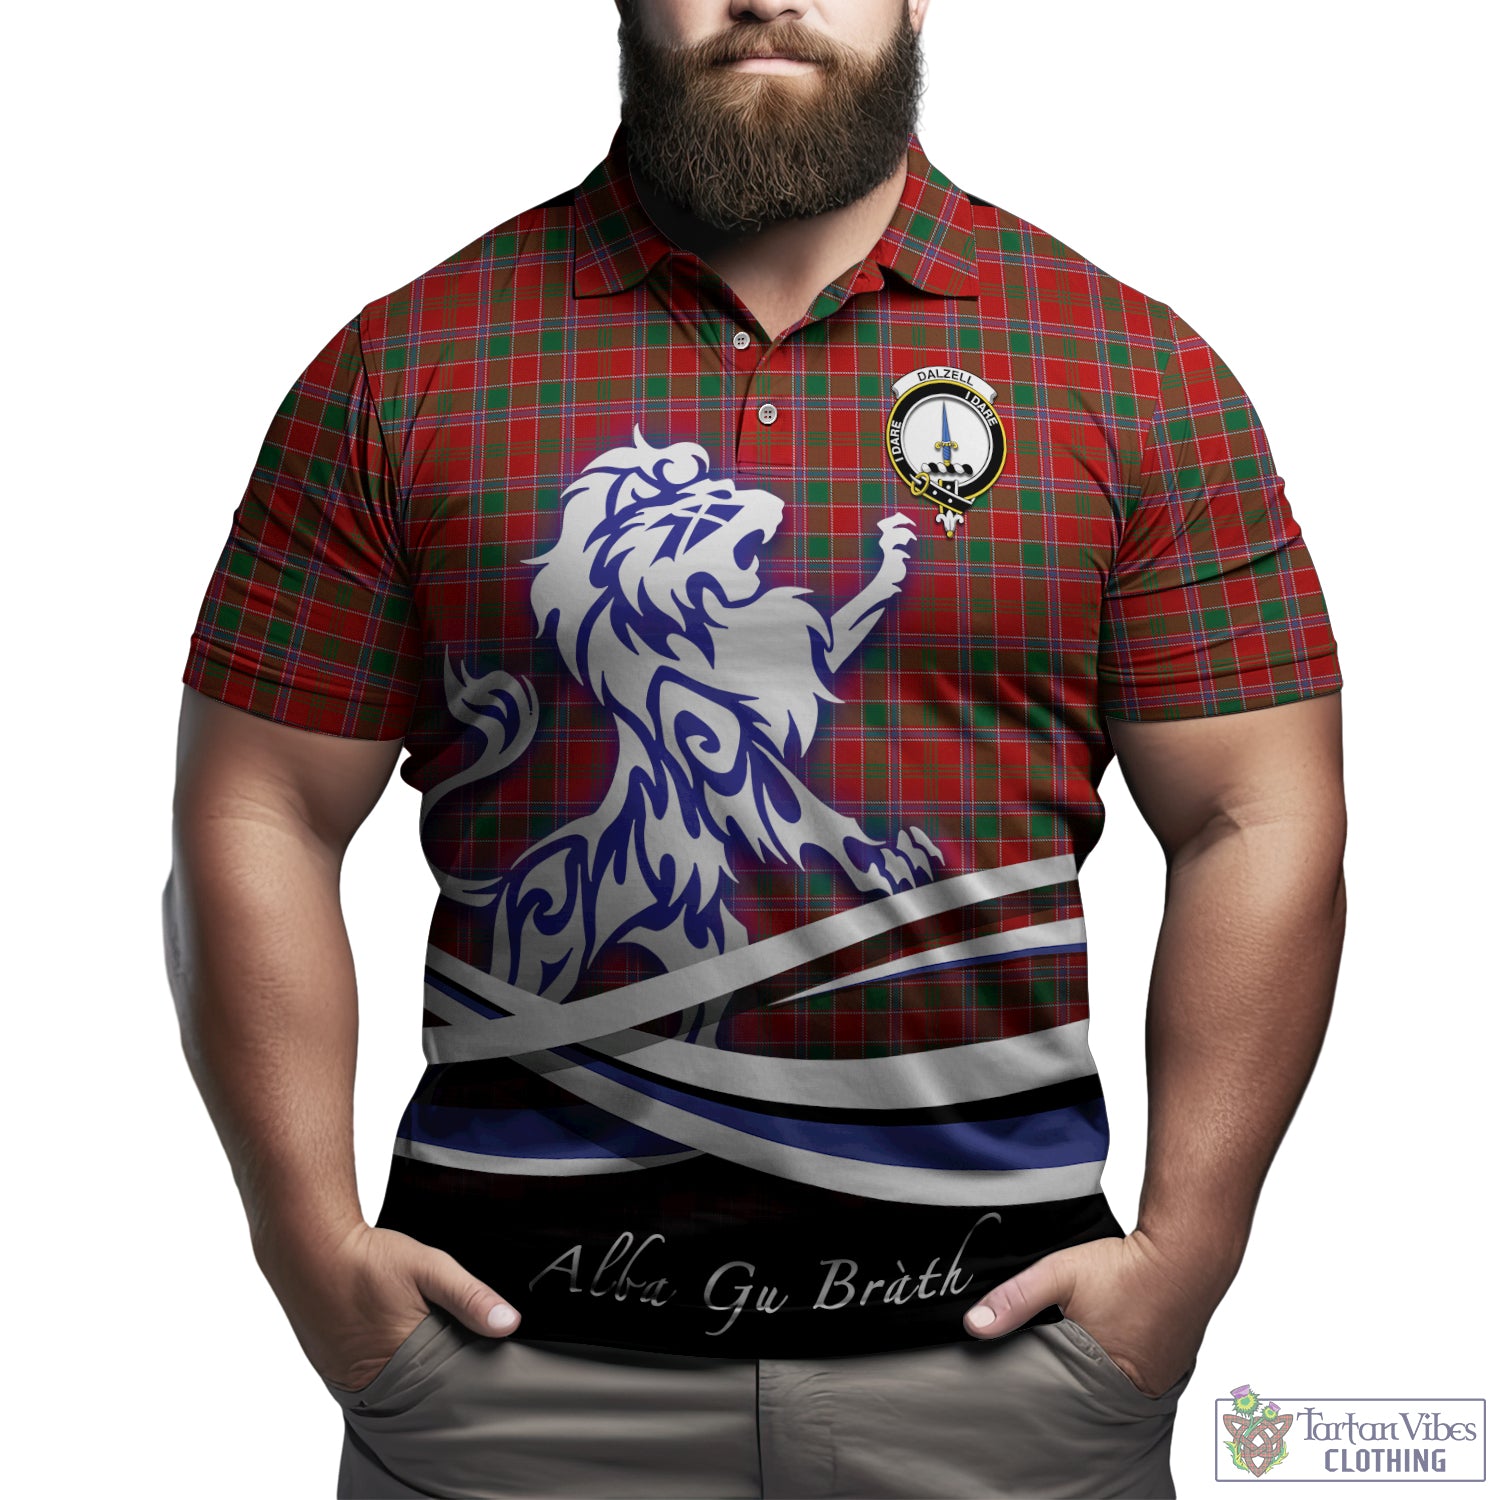 dalzell-dalziel-tartan-polo-shirt-with-alba-gu-brath-regal-lion-emblem